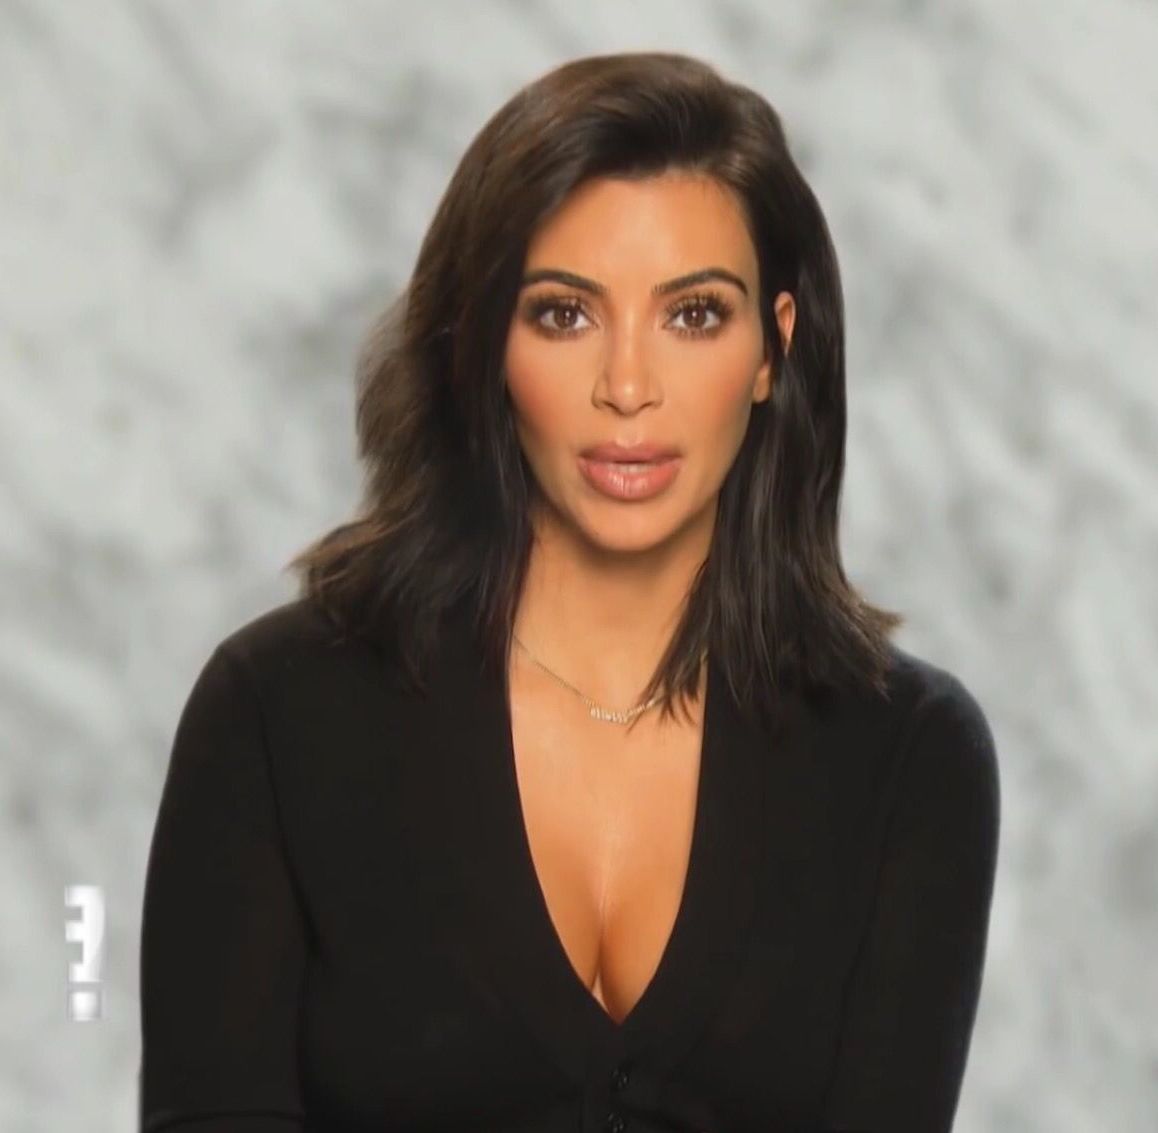 Kim Kardashian Short Hair Makeup | I Feel Pretty | Pinterest | Short Intended For Kim Kardashian Short Hairstyles (View 15 of 25)